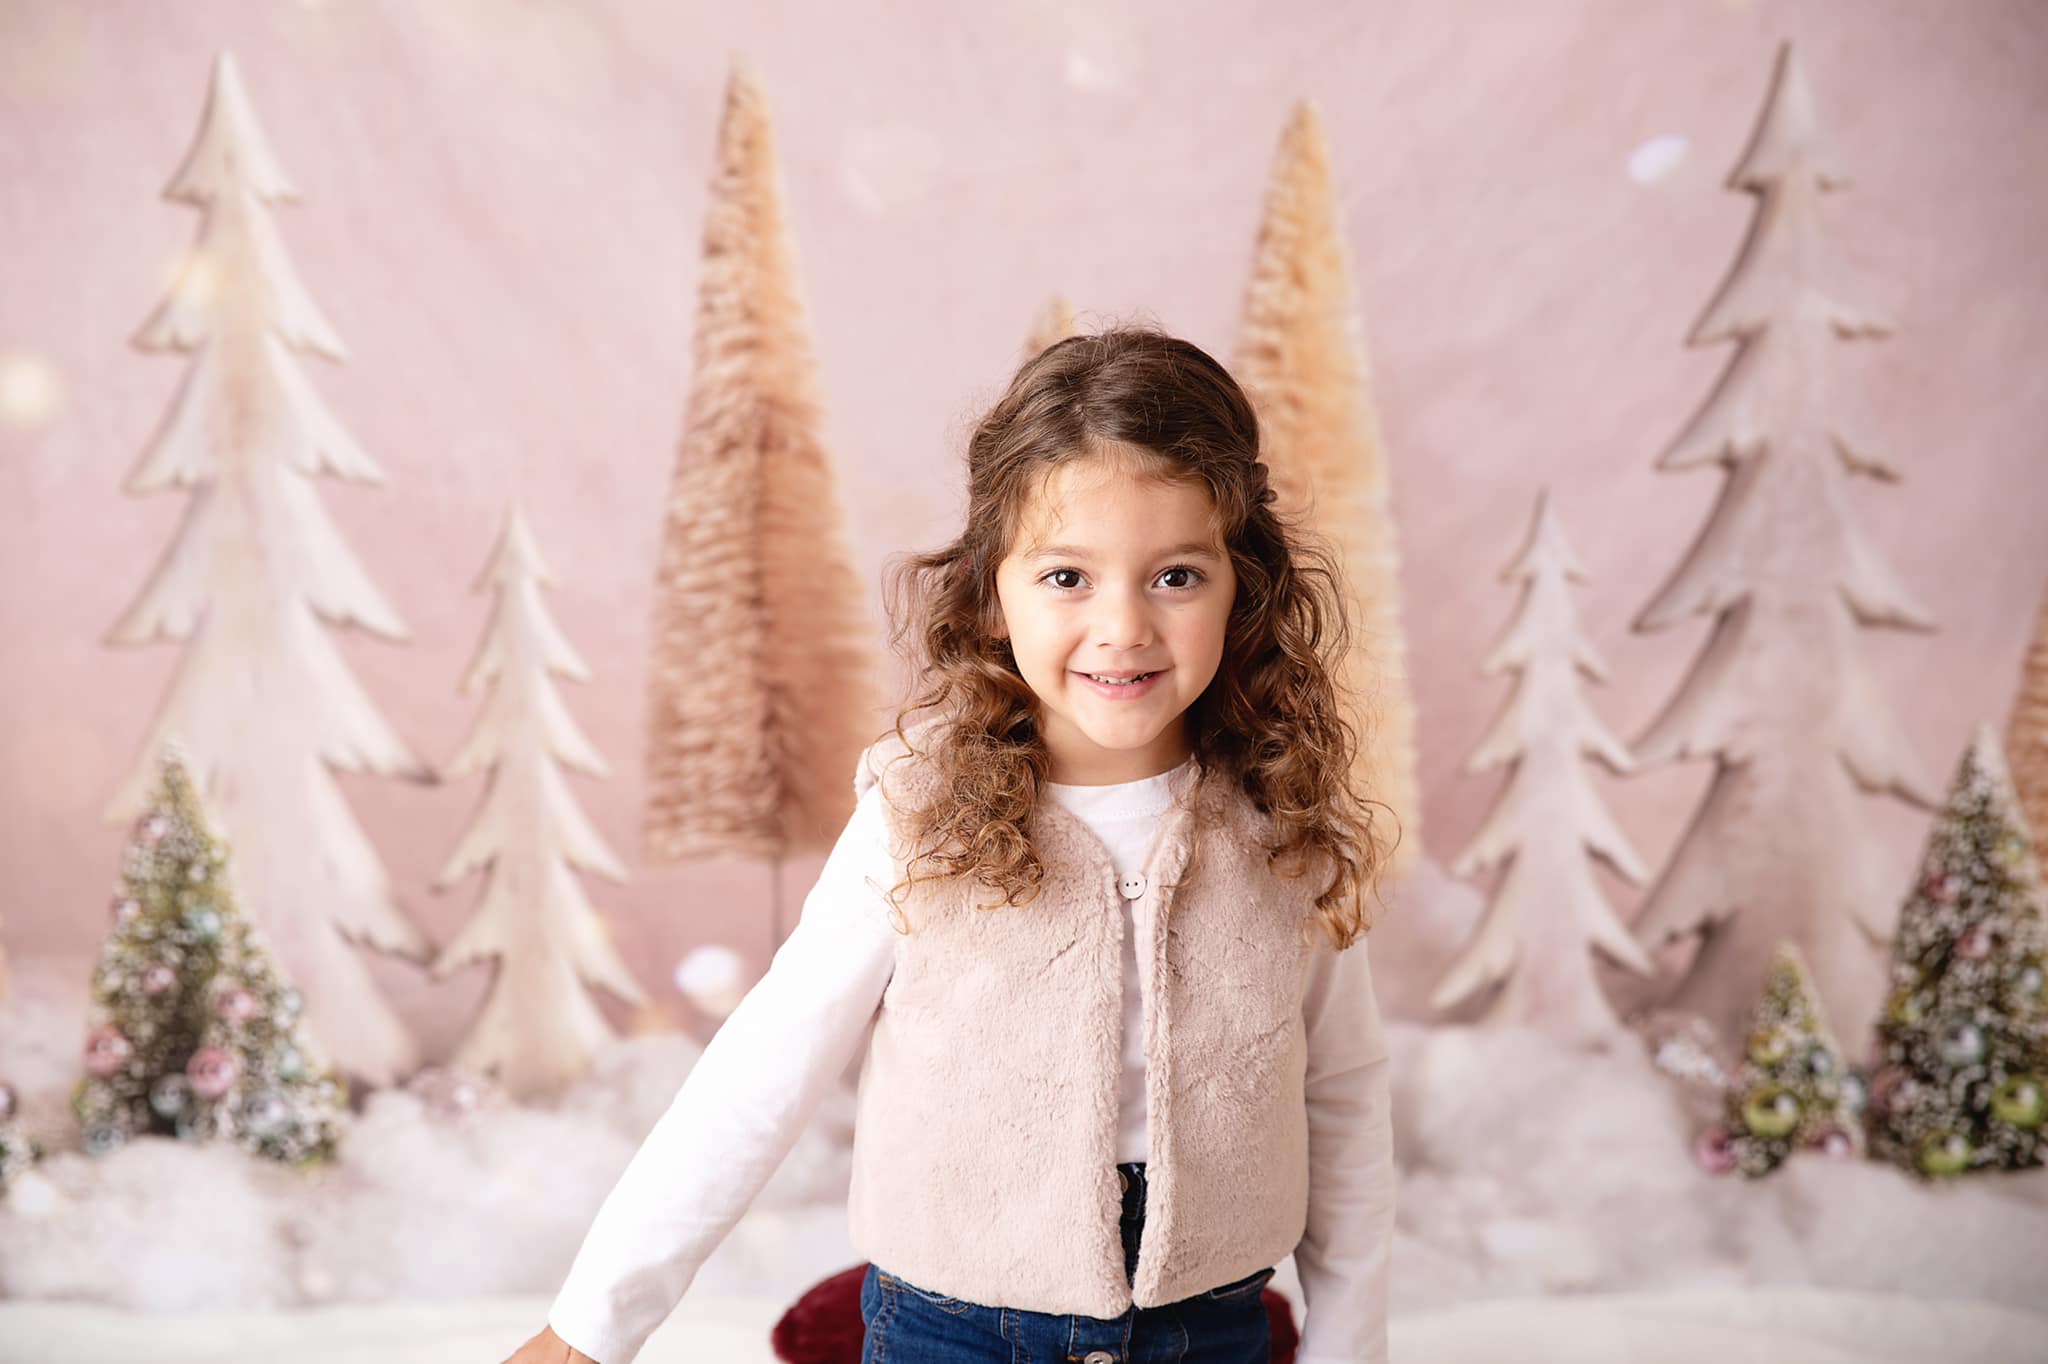 Kate Elegant Christmas Trees with Glitter Backdrop Designed By Mandy Ringe Photography